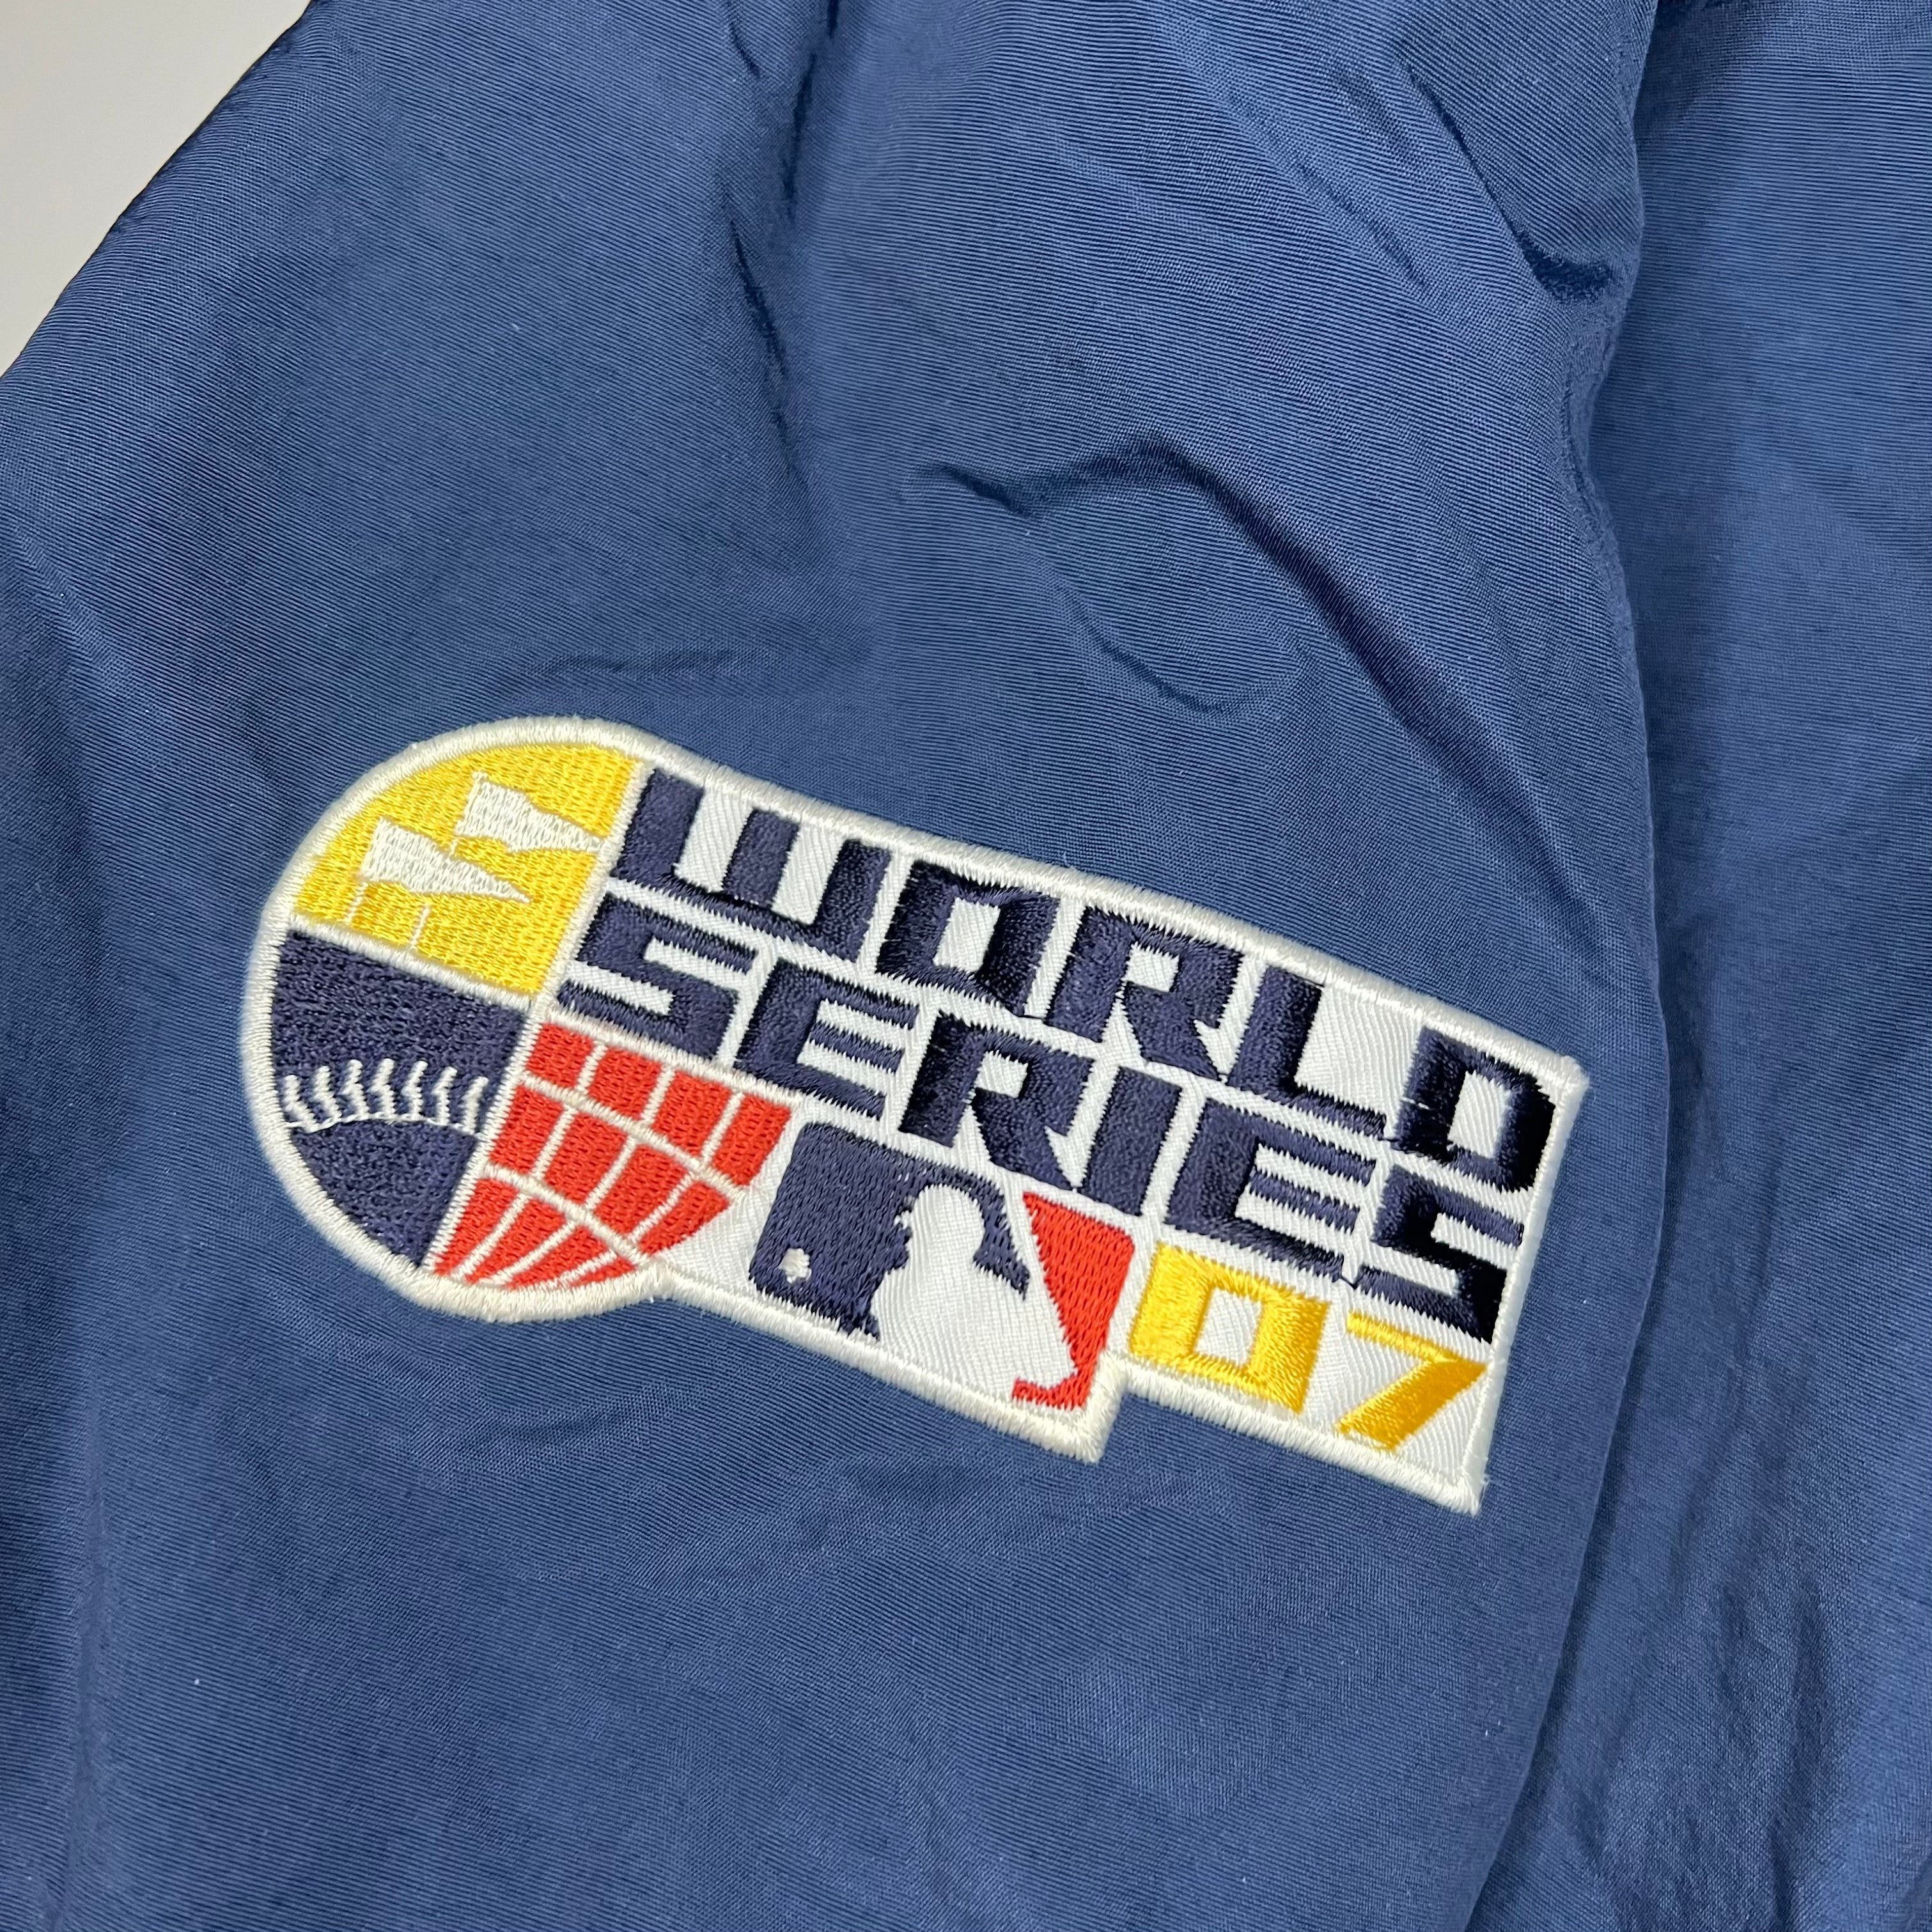 Boston Red Sox World Series 2007 Jacket (Size XL)